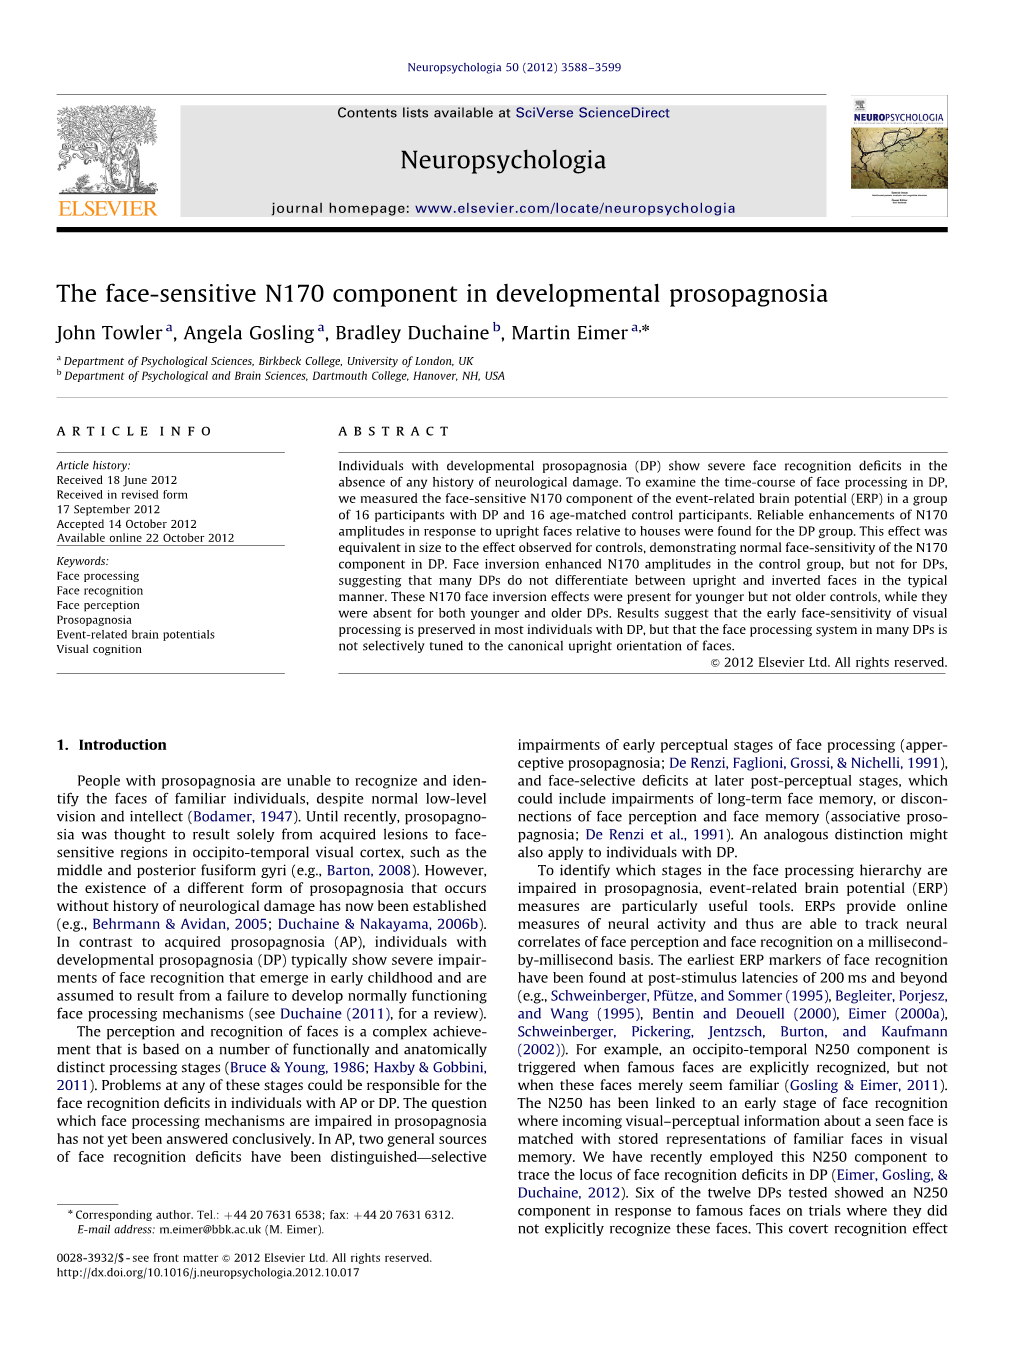 The Face-Sensitive N170 Component in Developmental Prosopagnosia